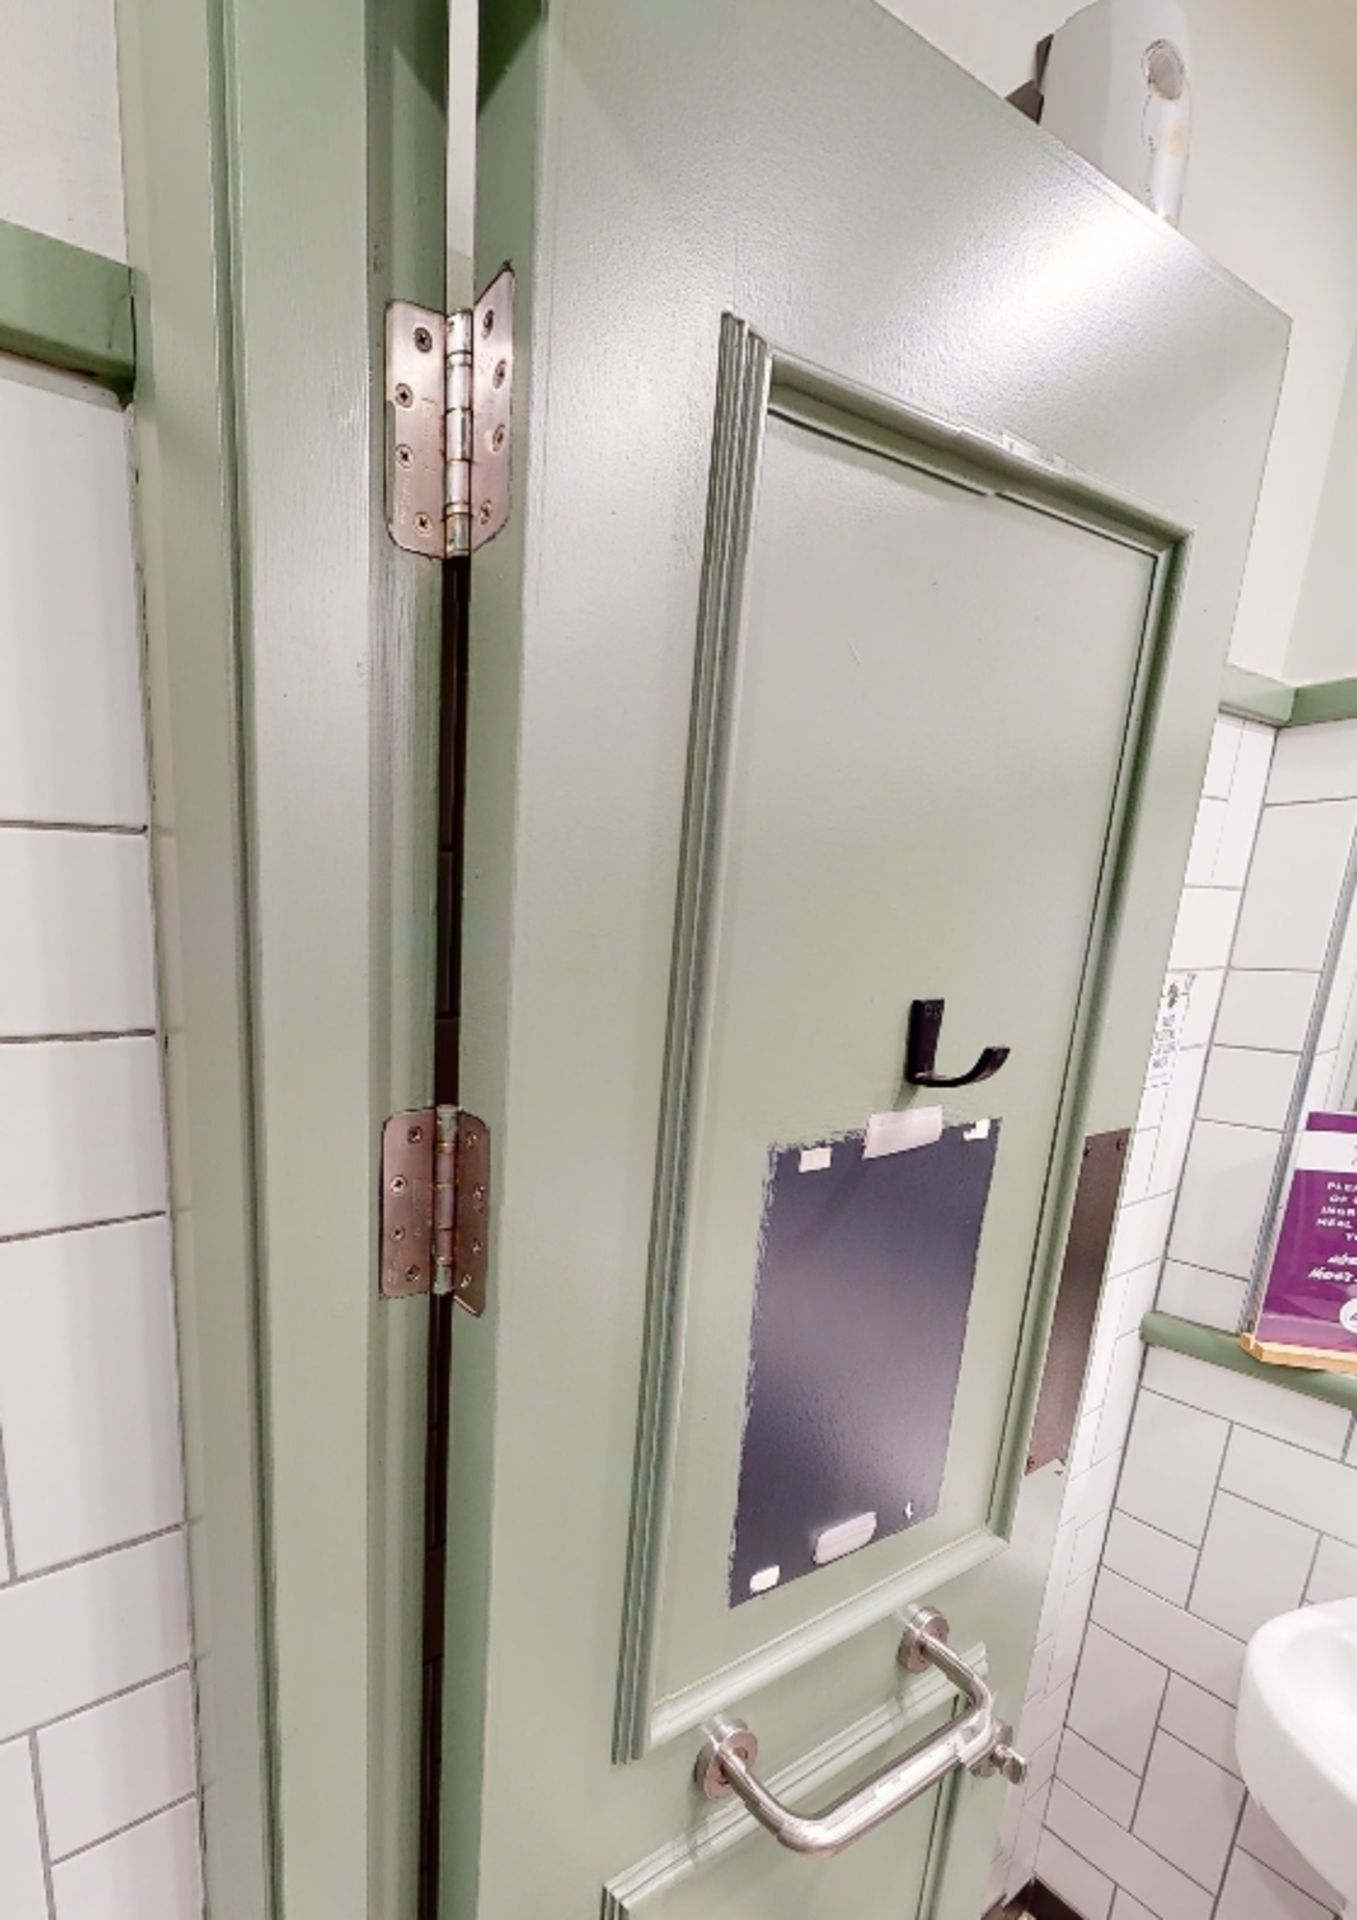 5 x Internal Toilet Cubicle Doors in Pistachio Green - Includes Locks, Hinges, Kick Plates & Handles - Image 2 of 3